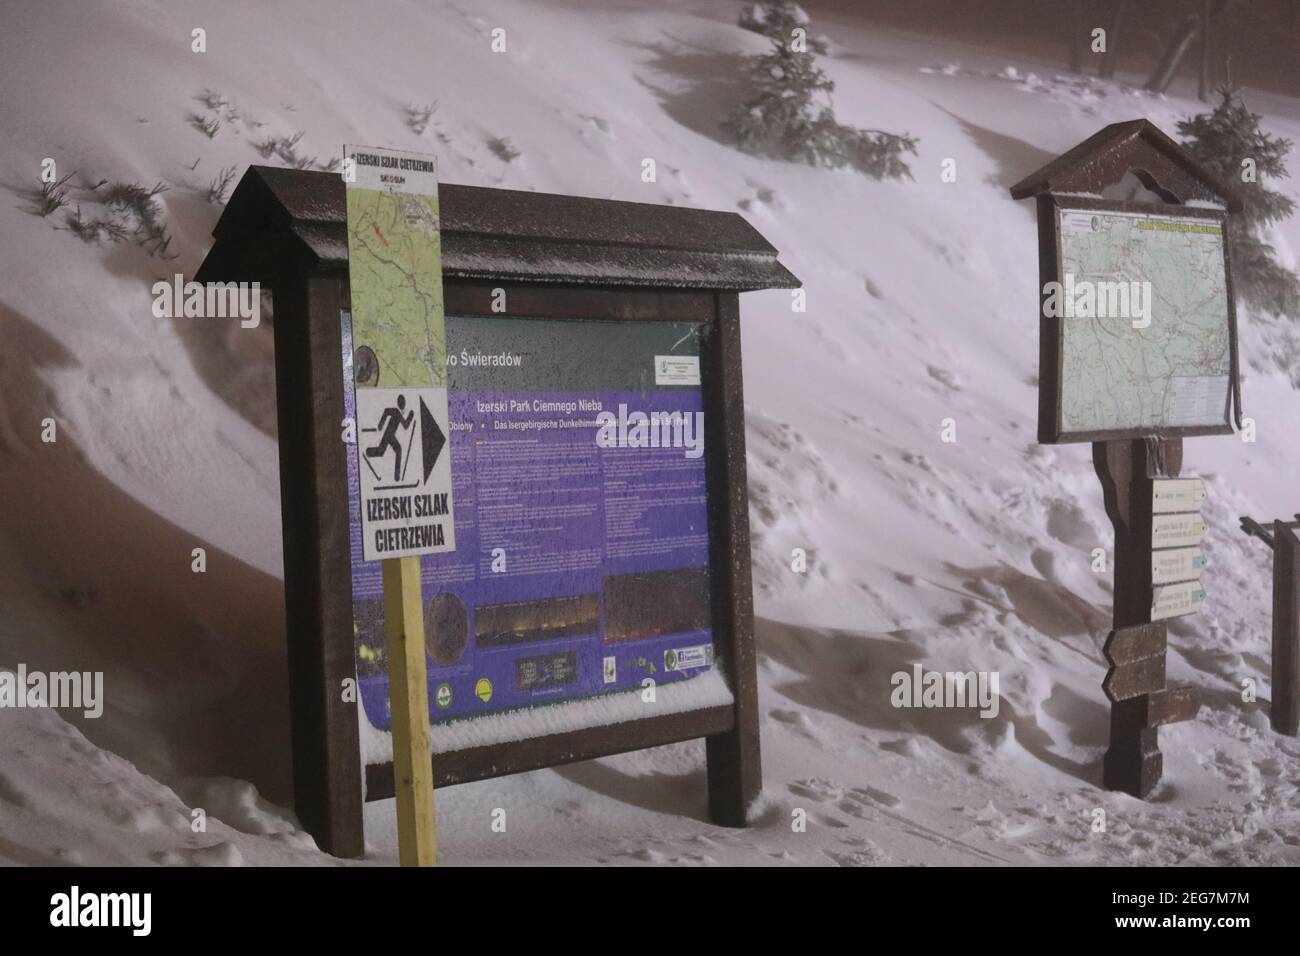 Trotz Corona: Polen öffnet Skigebiete - Ansturm auf Wintersportorte folgt prompt, Swieradow Zdroj (Bad Flinsberg) Polen,17.02.2021 Stock Photo